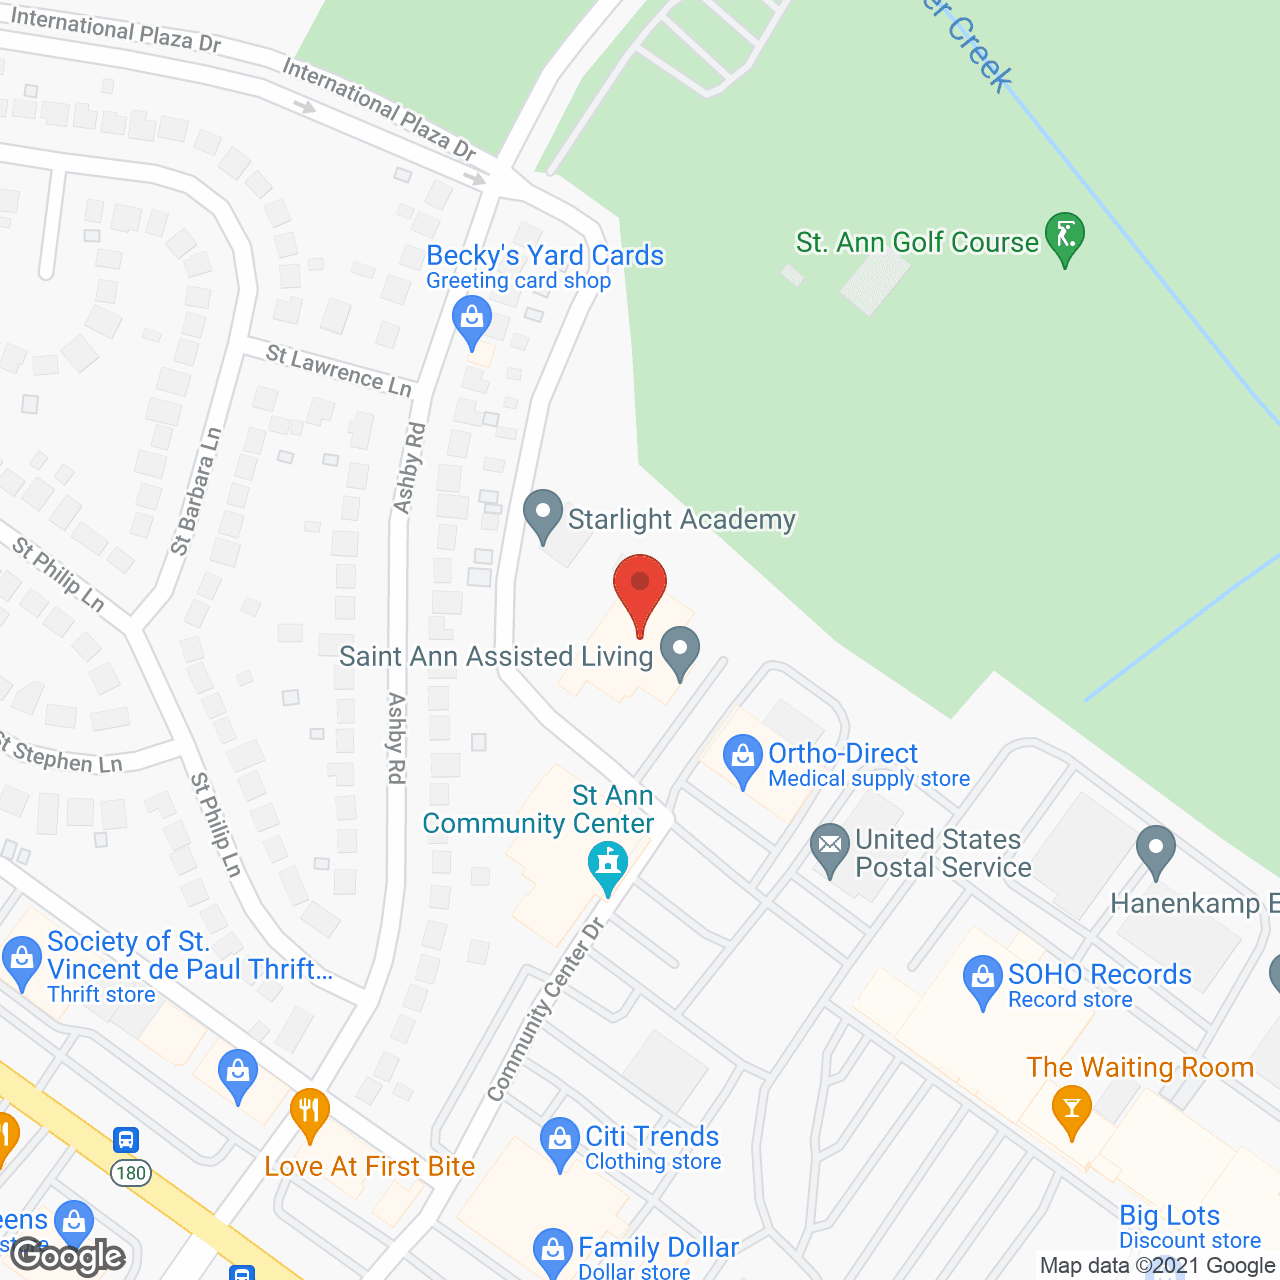 Saint Ann Assisted Living Center in google map